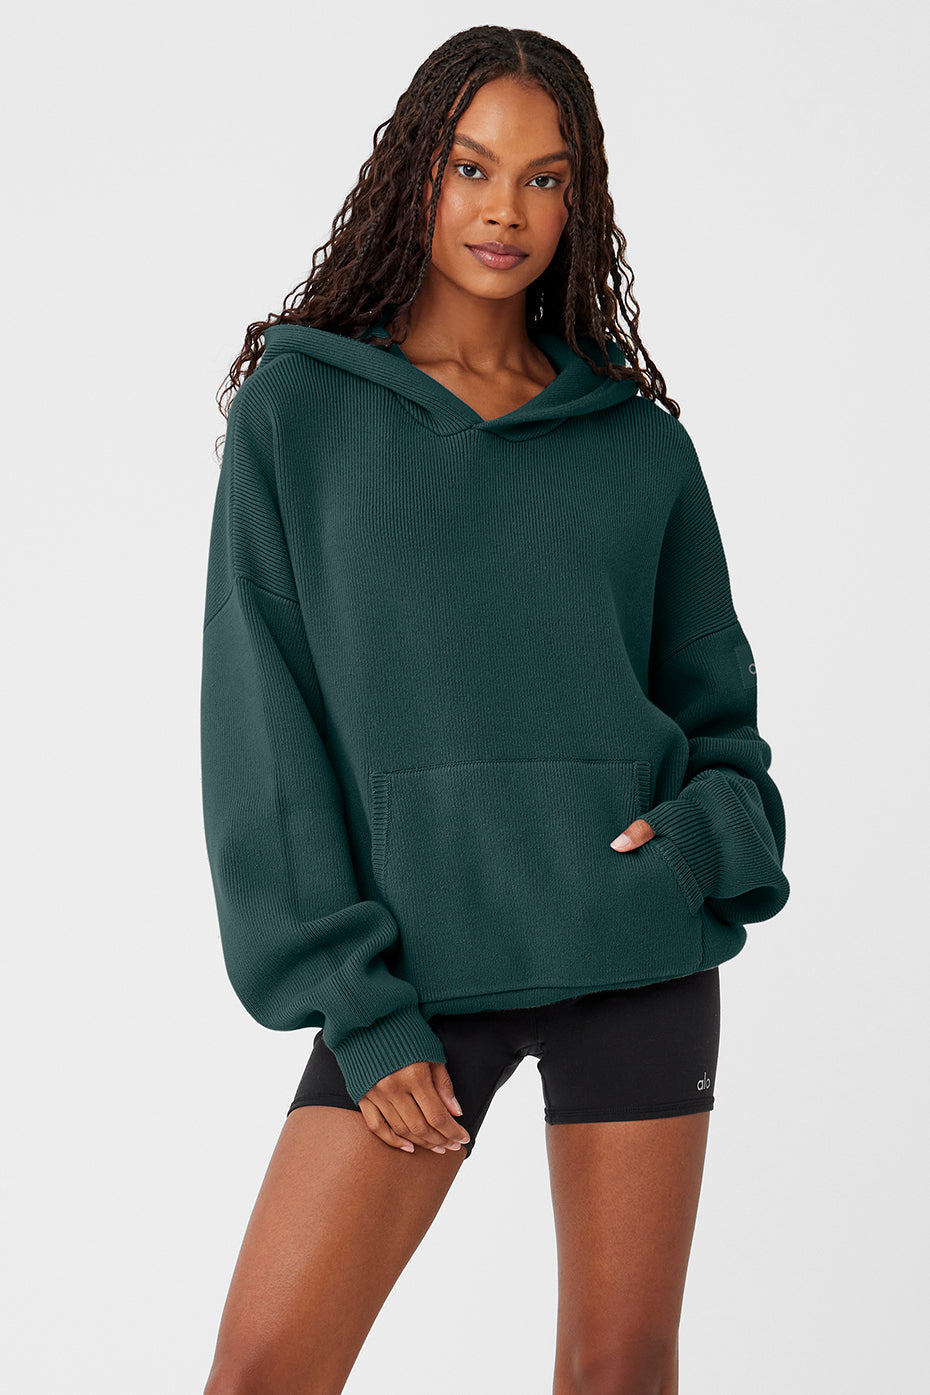 Scholar Hooded Sweater - Midnight Green - Midnight Green / XS